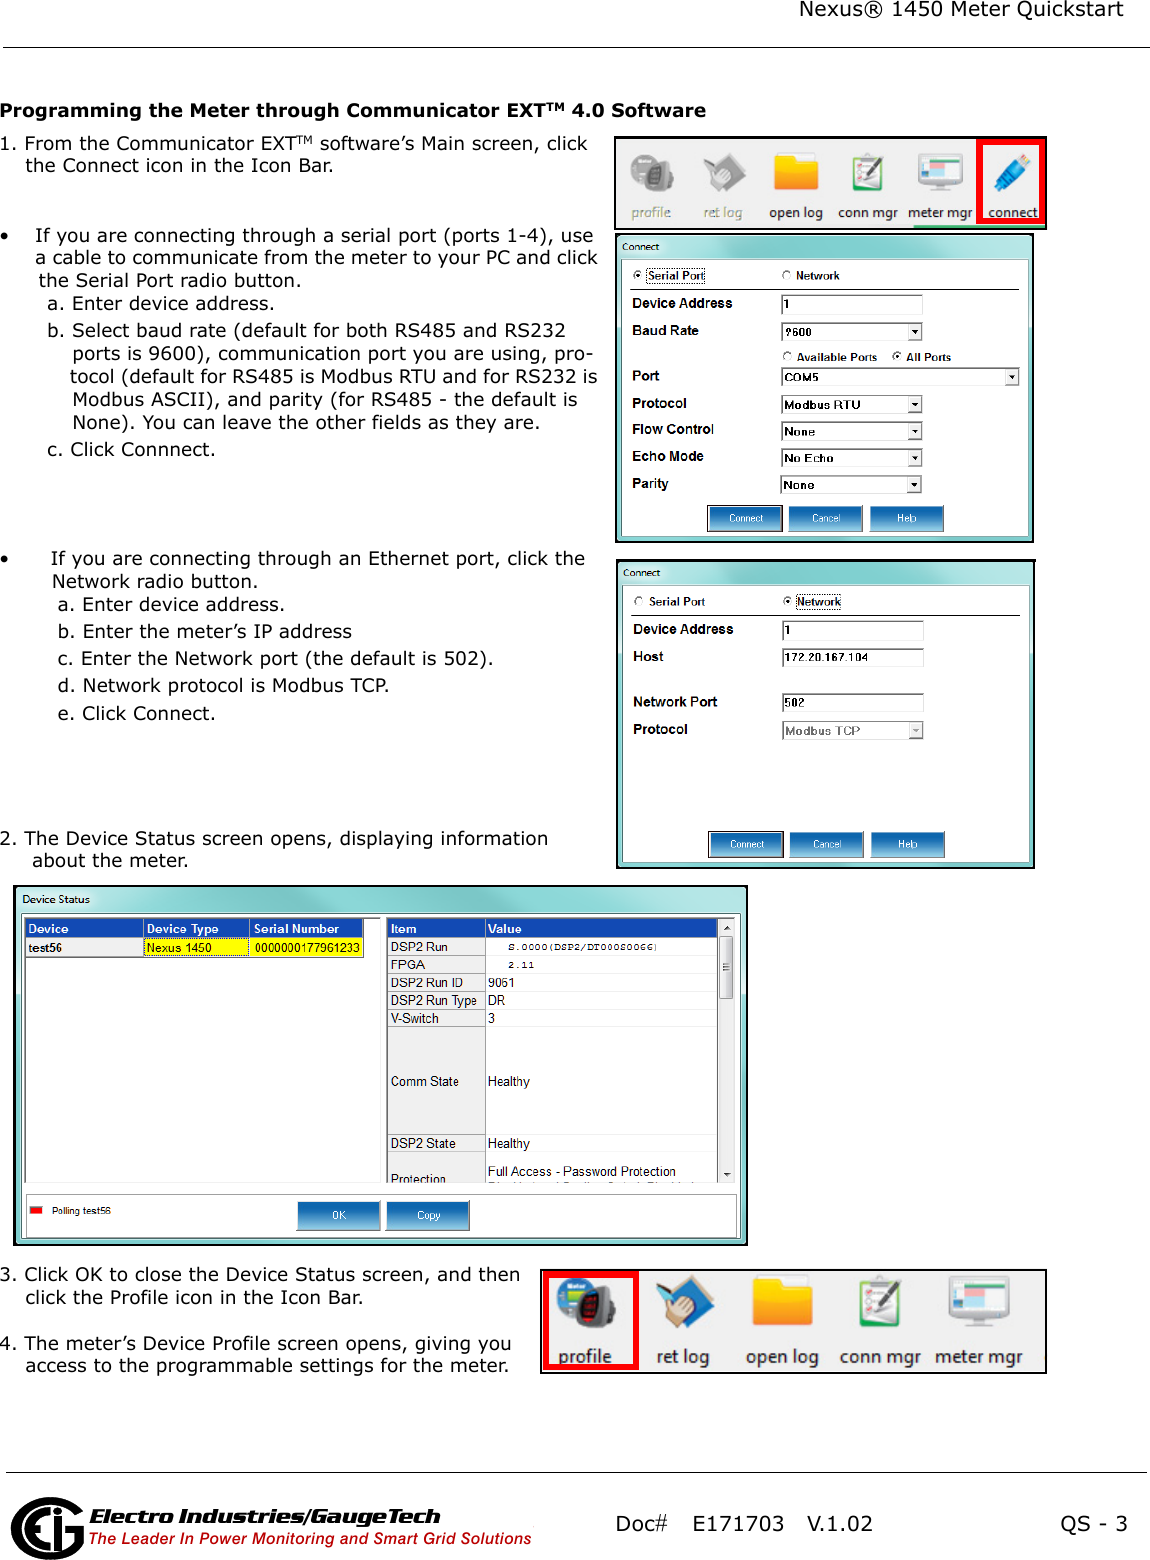 Page 3 of 4 - Nexus 1450 Meter QS Guide V.1.02 Nexus-1450-Meter-Quickstart-Guide E171703